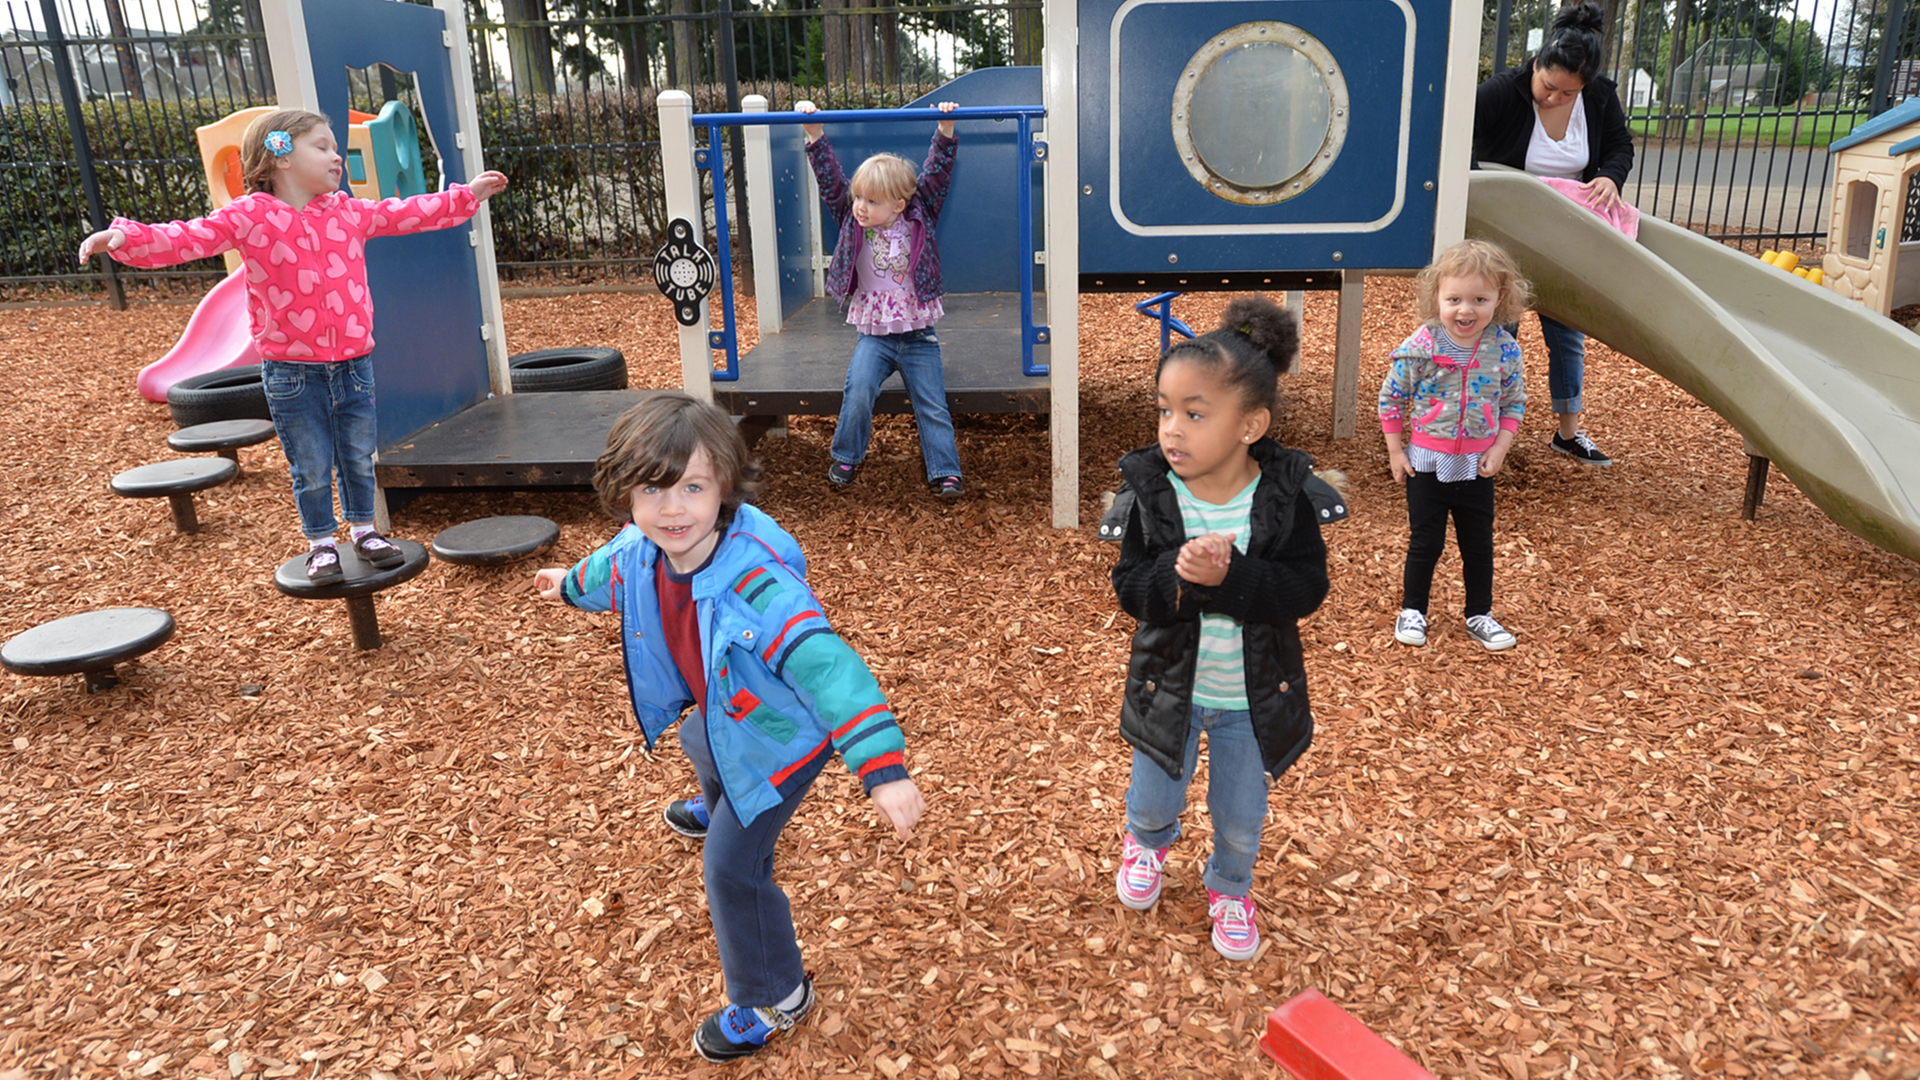 Children at childcare playing on playground